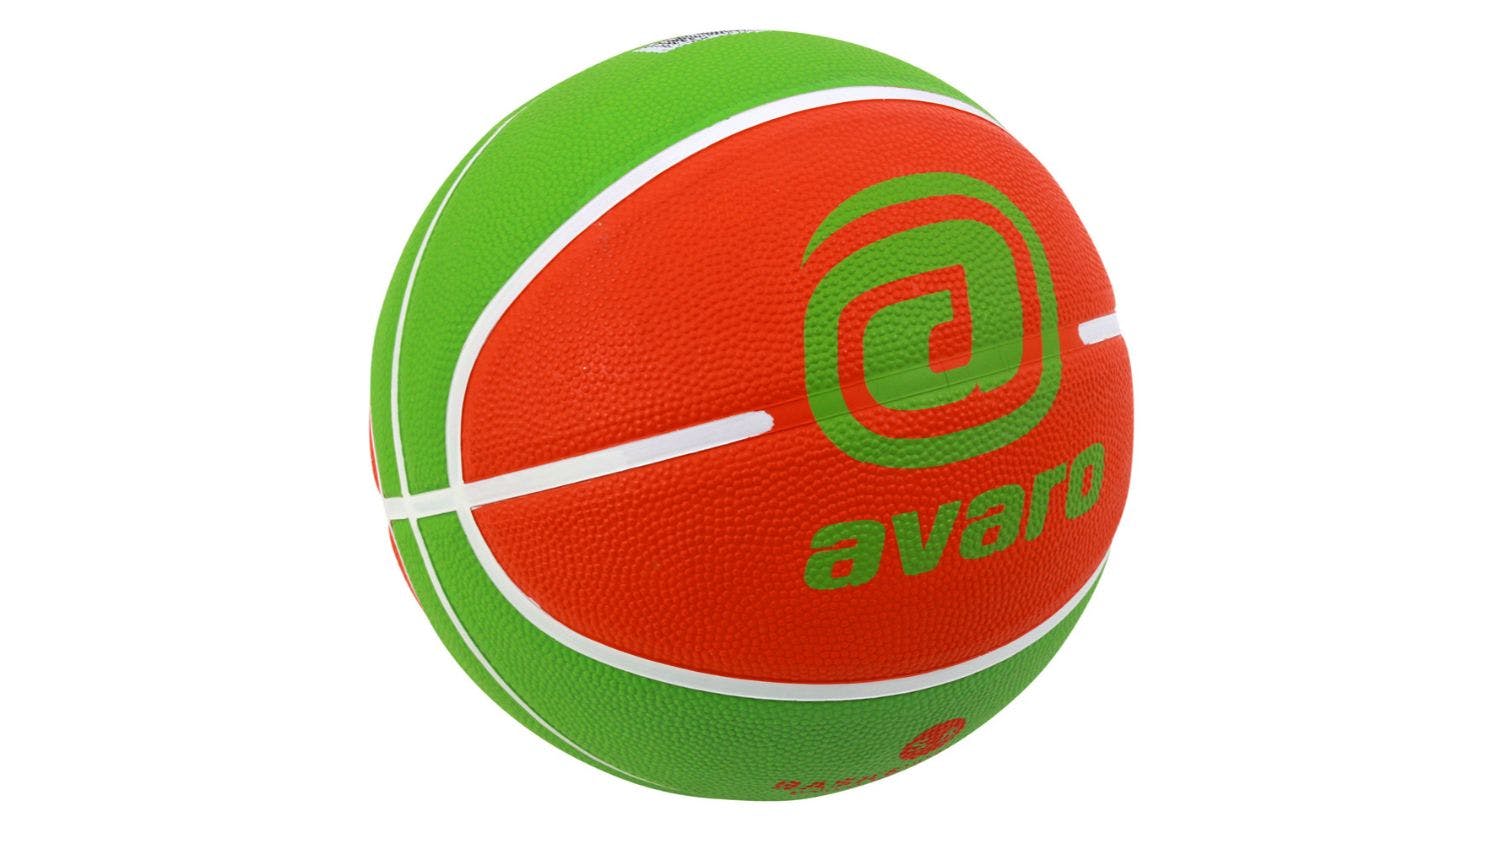 Avaro Club Match Basketball Size 5 - Green